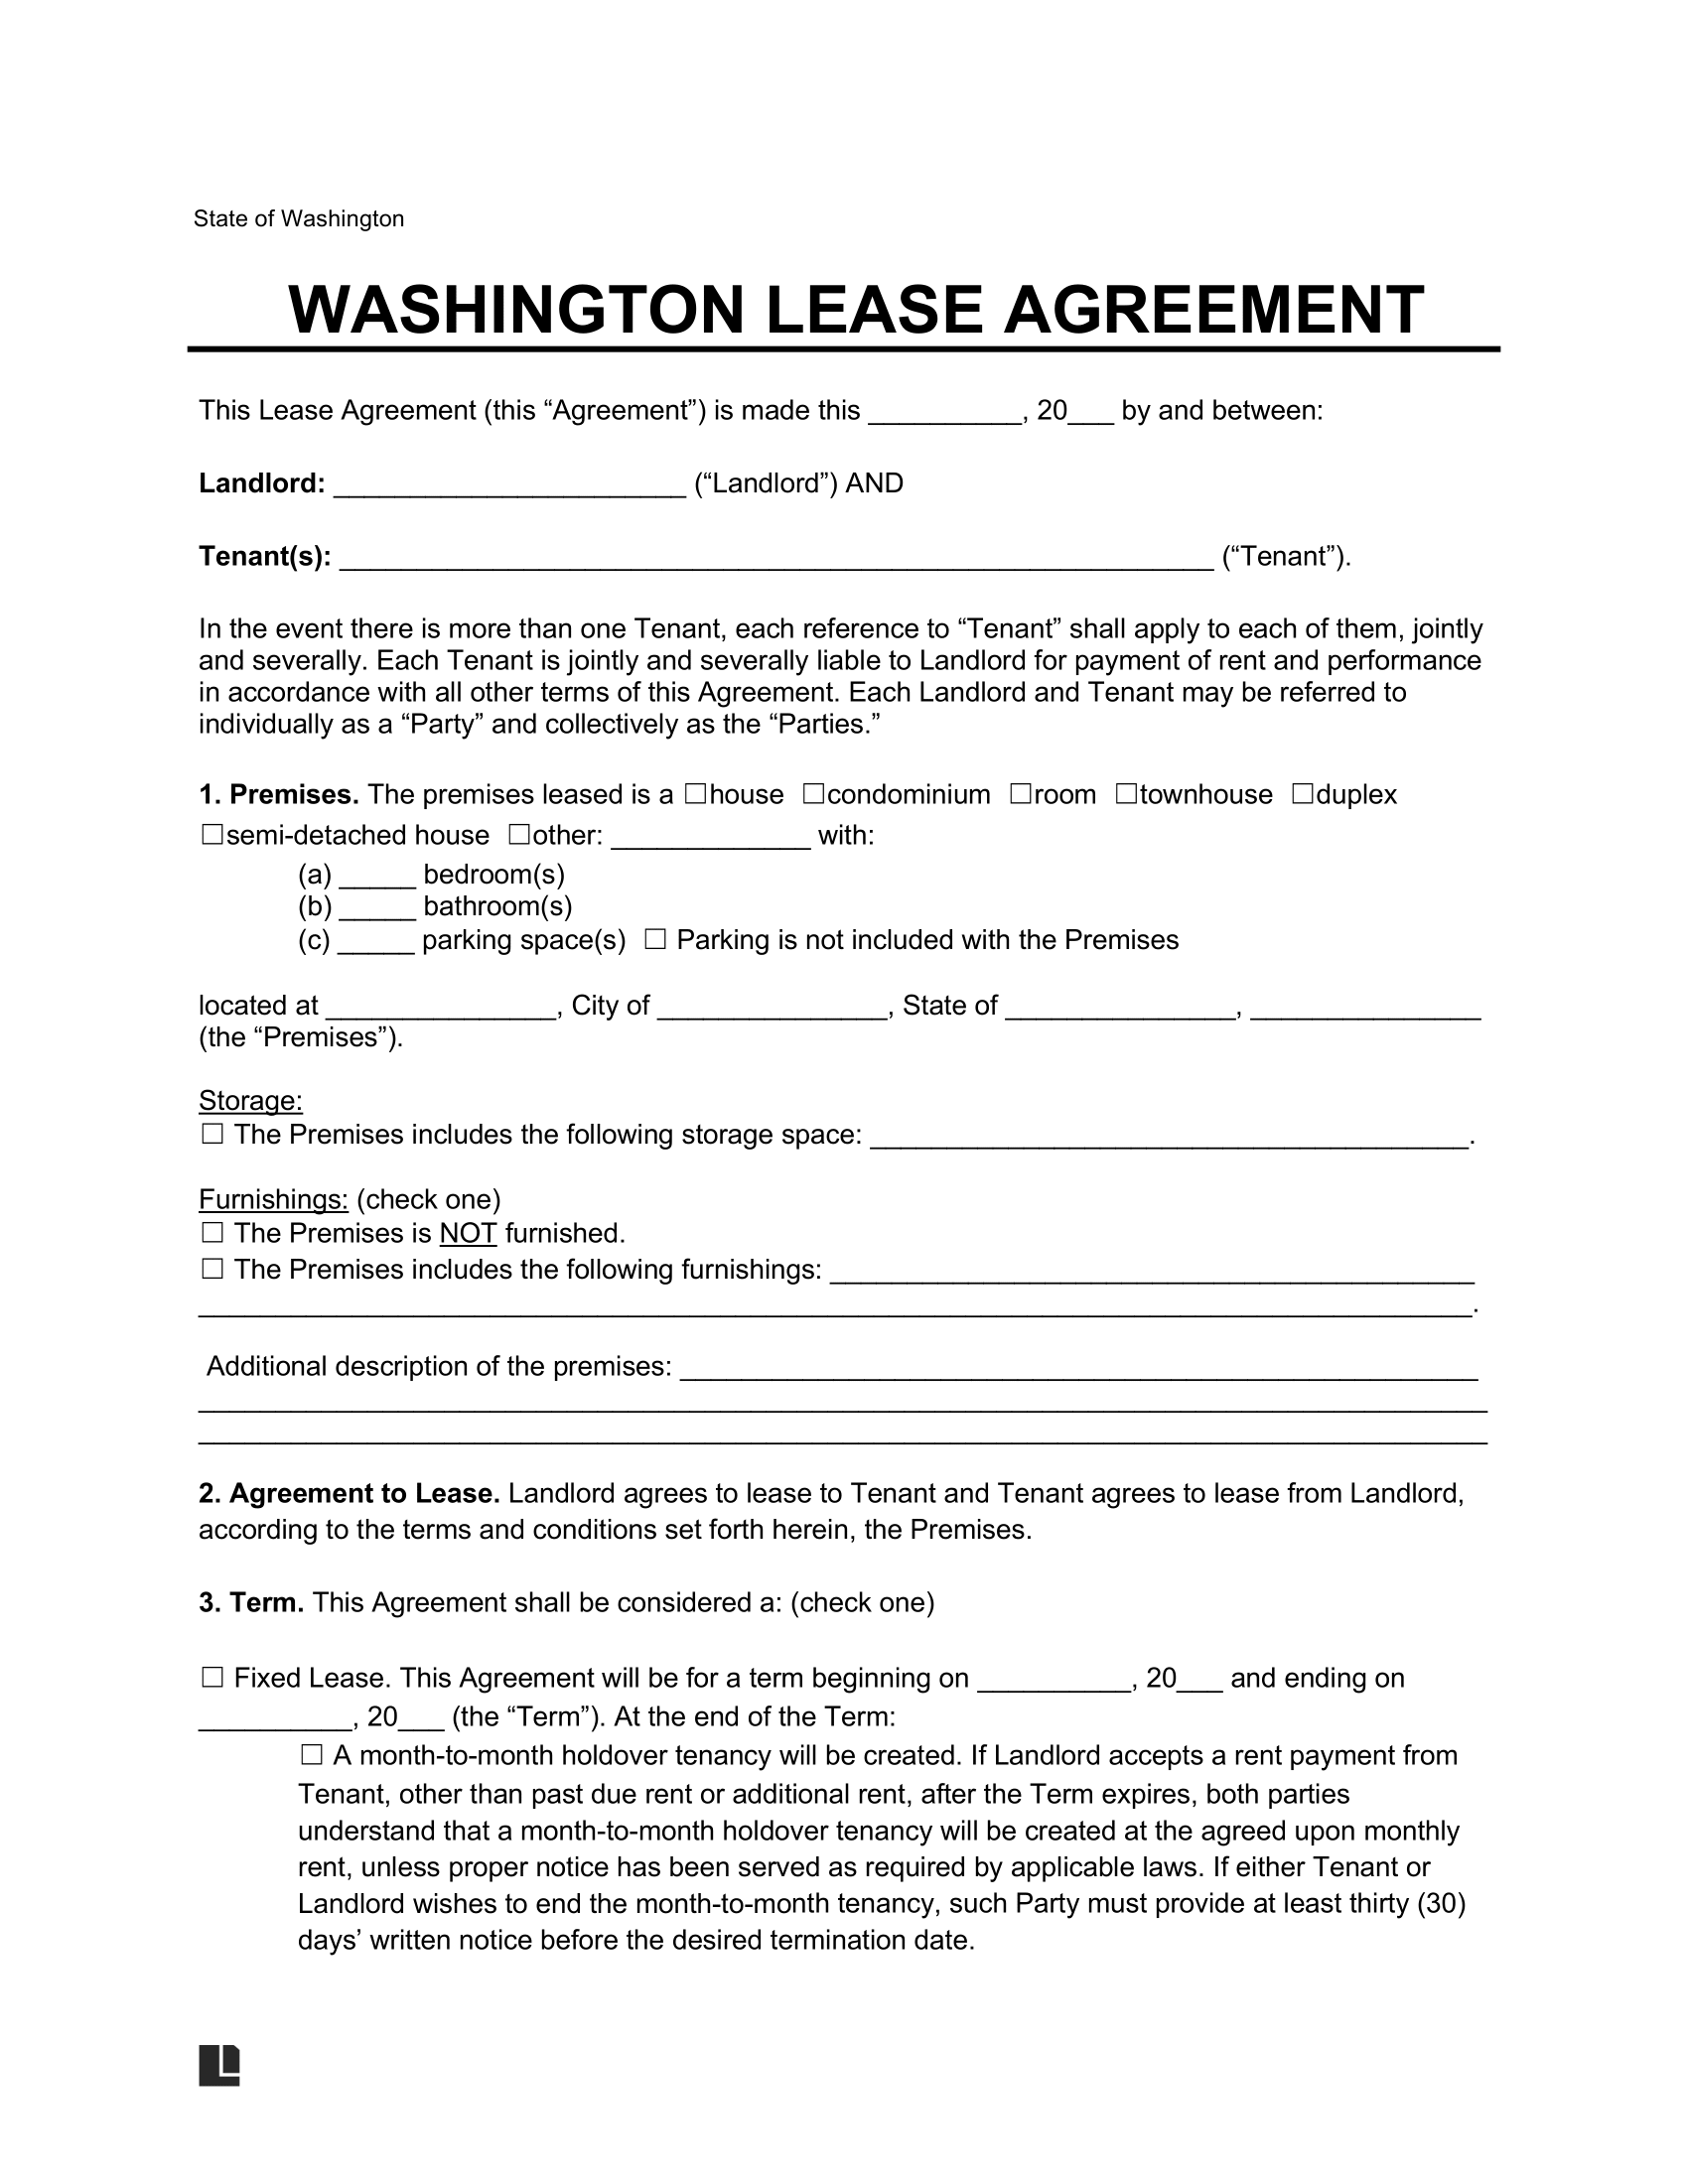 Washington Standard Residential Lease Agreement